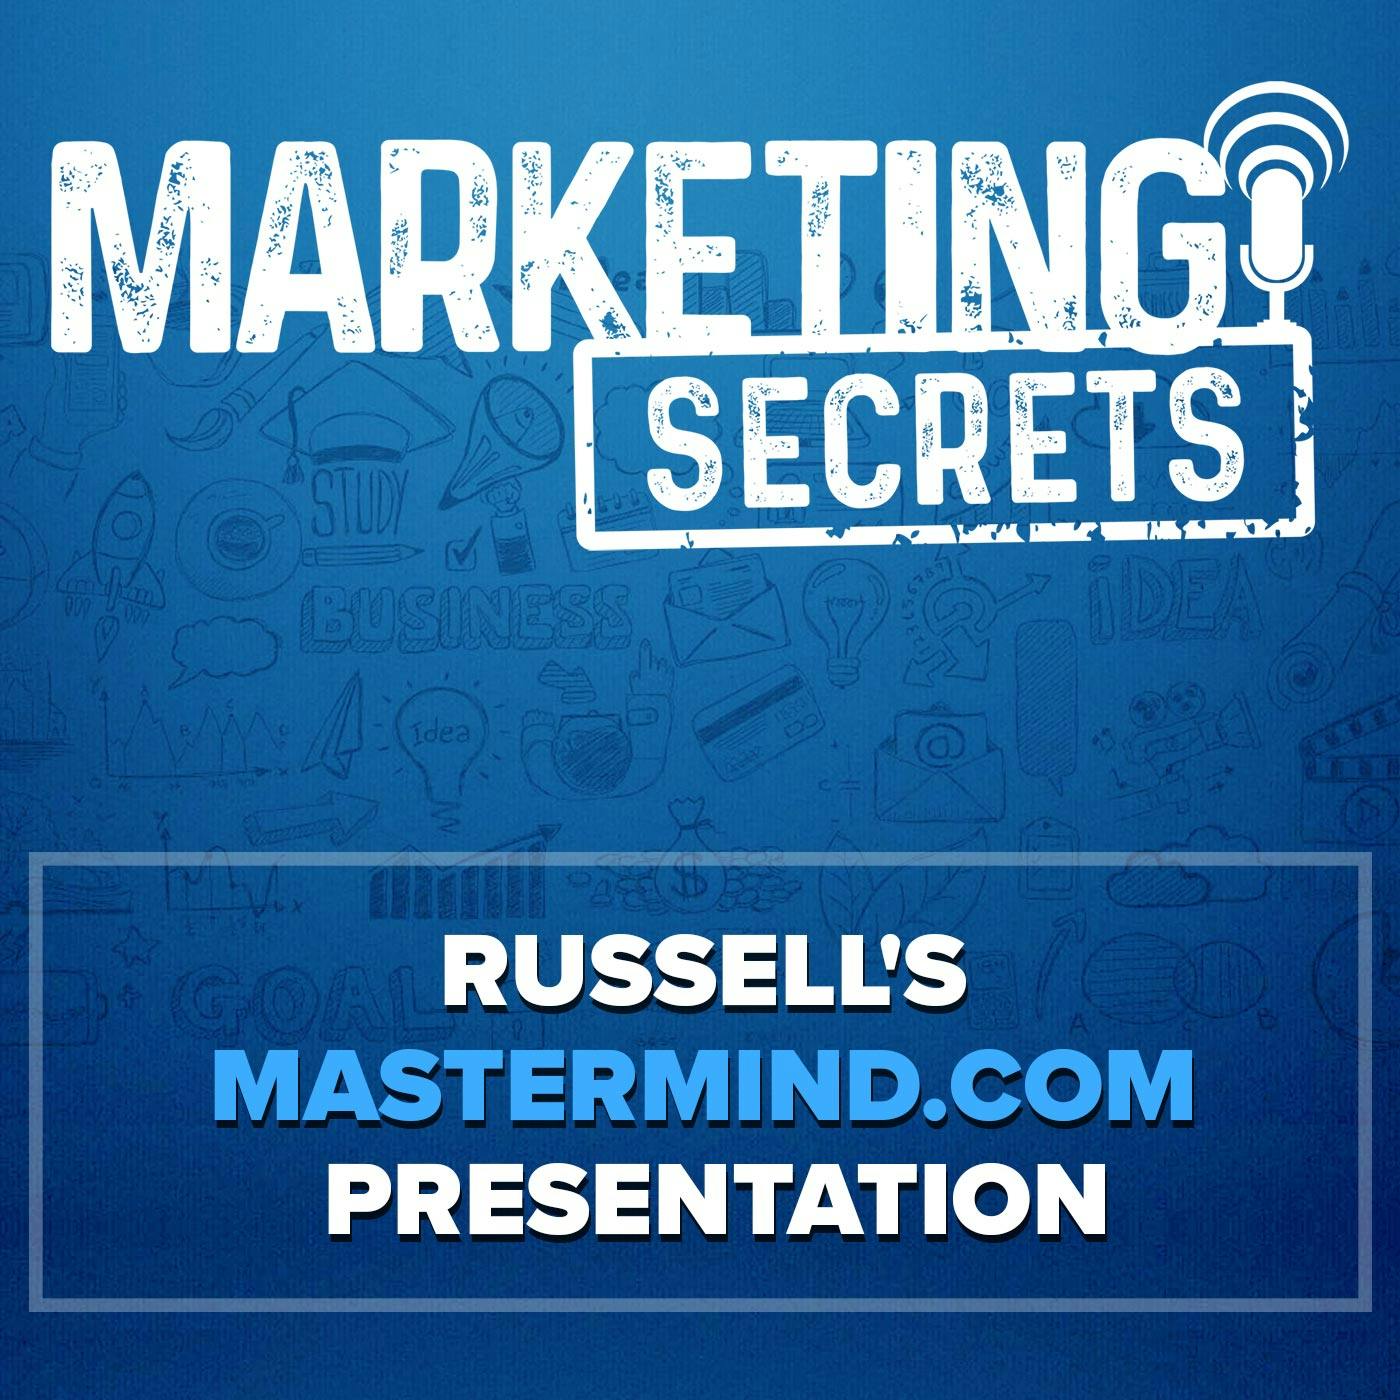 Russell's Mastermind.com Presentation